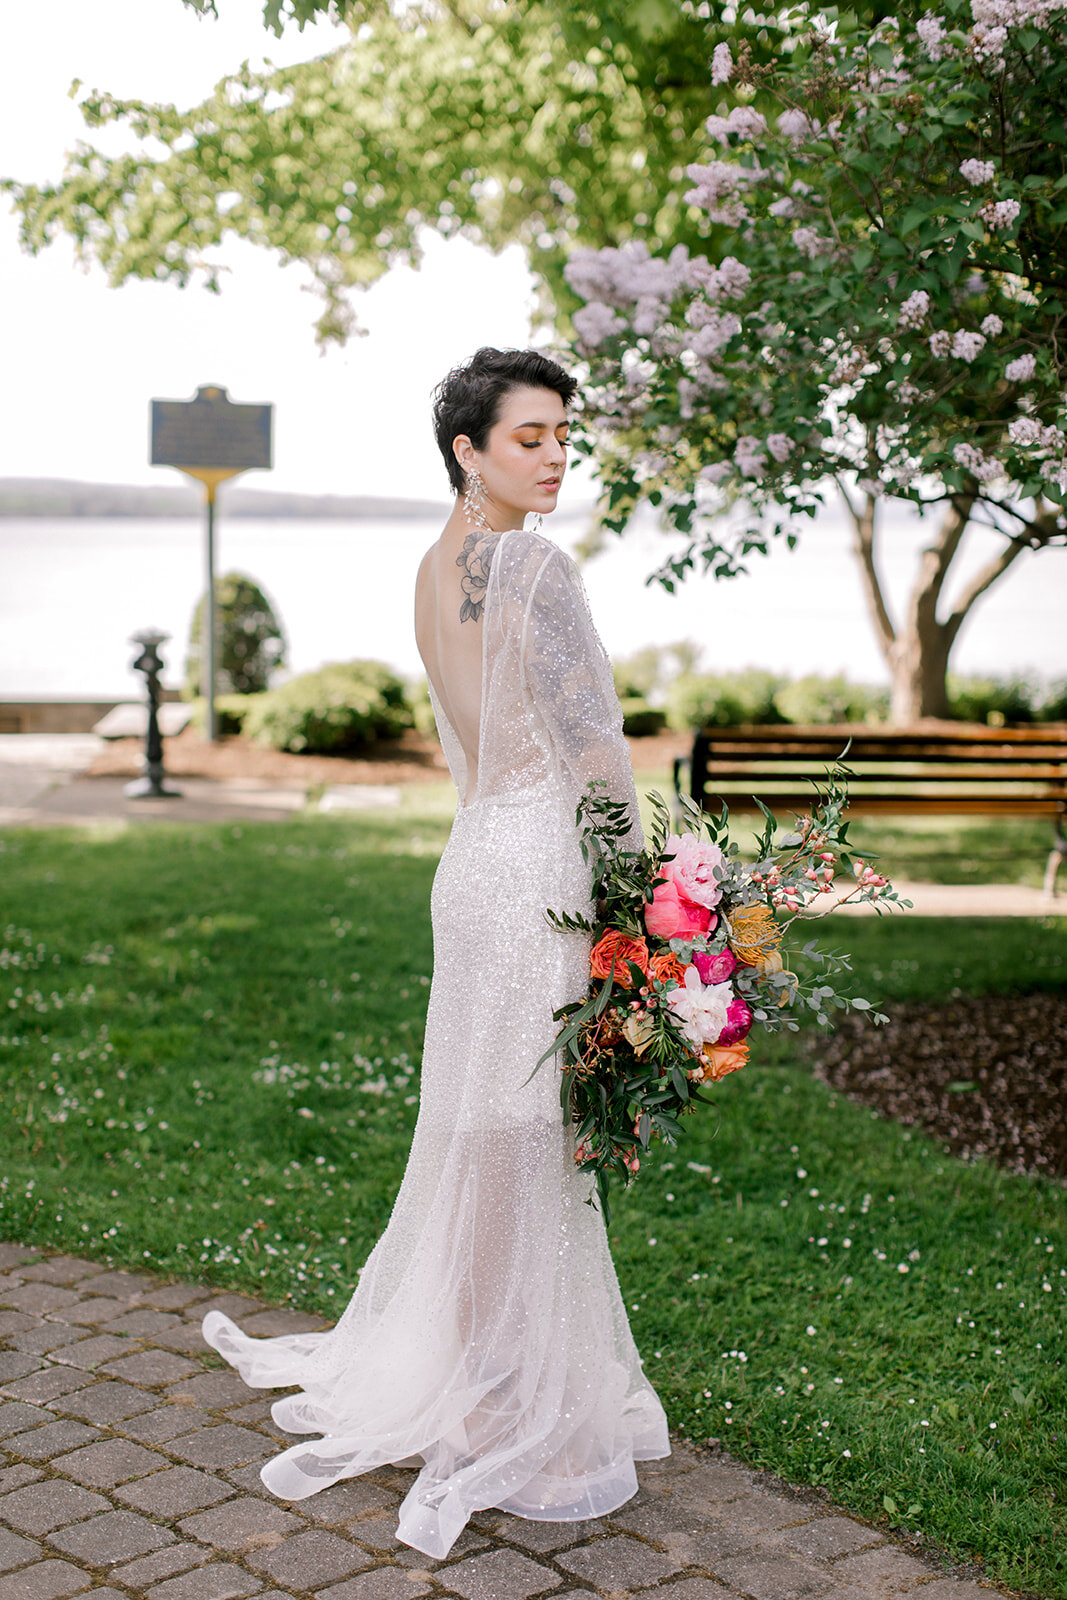 Finger Lakes Wedding Photography - Skaneatlas Wedding - Leanne Rose Photography -3995.jpg